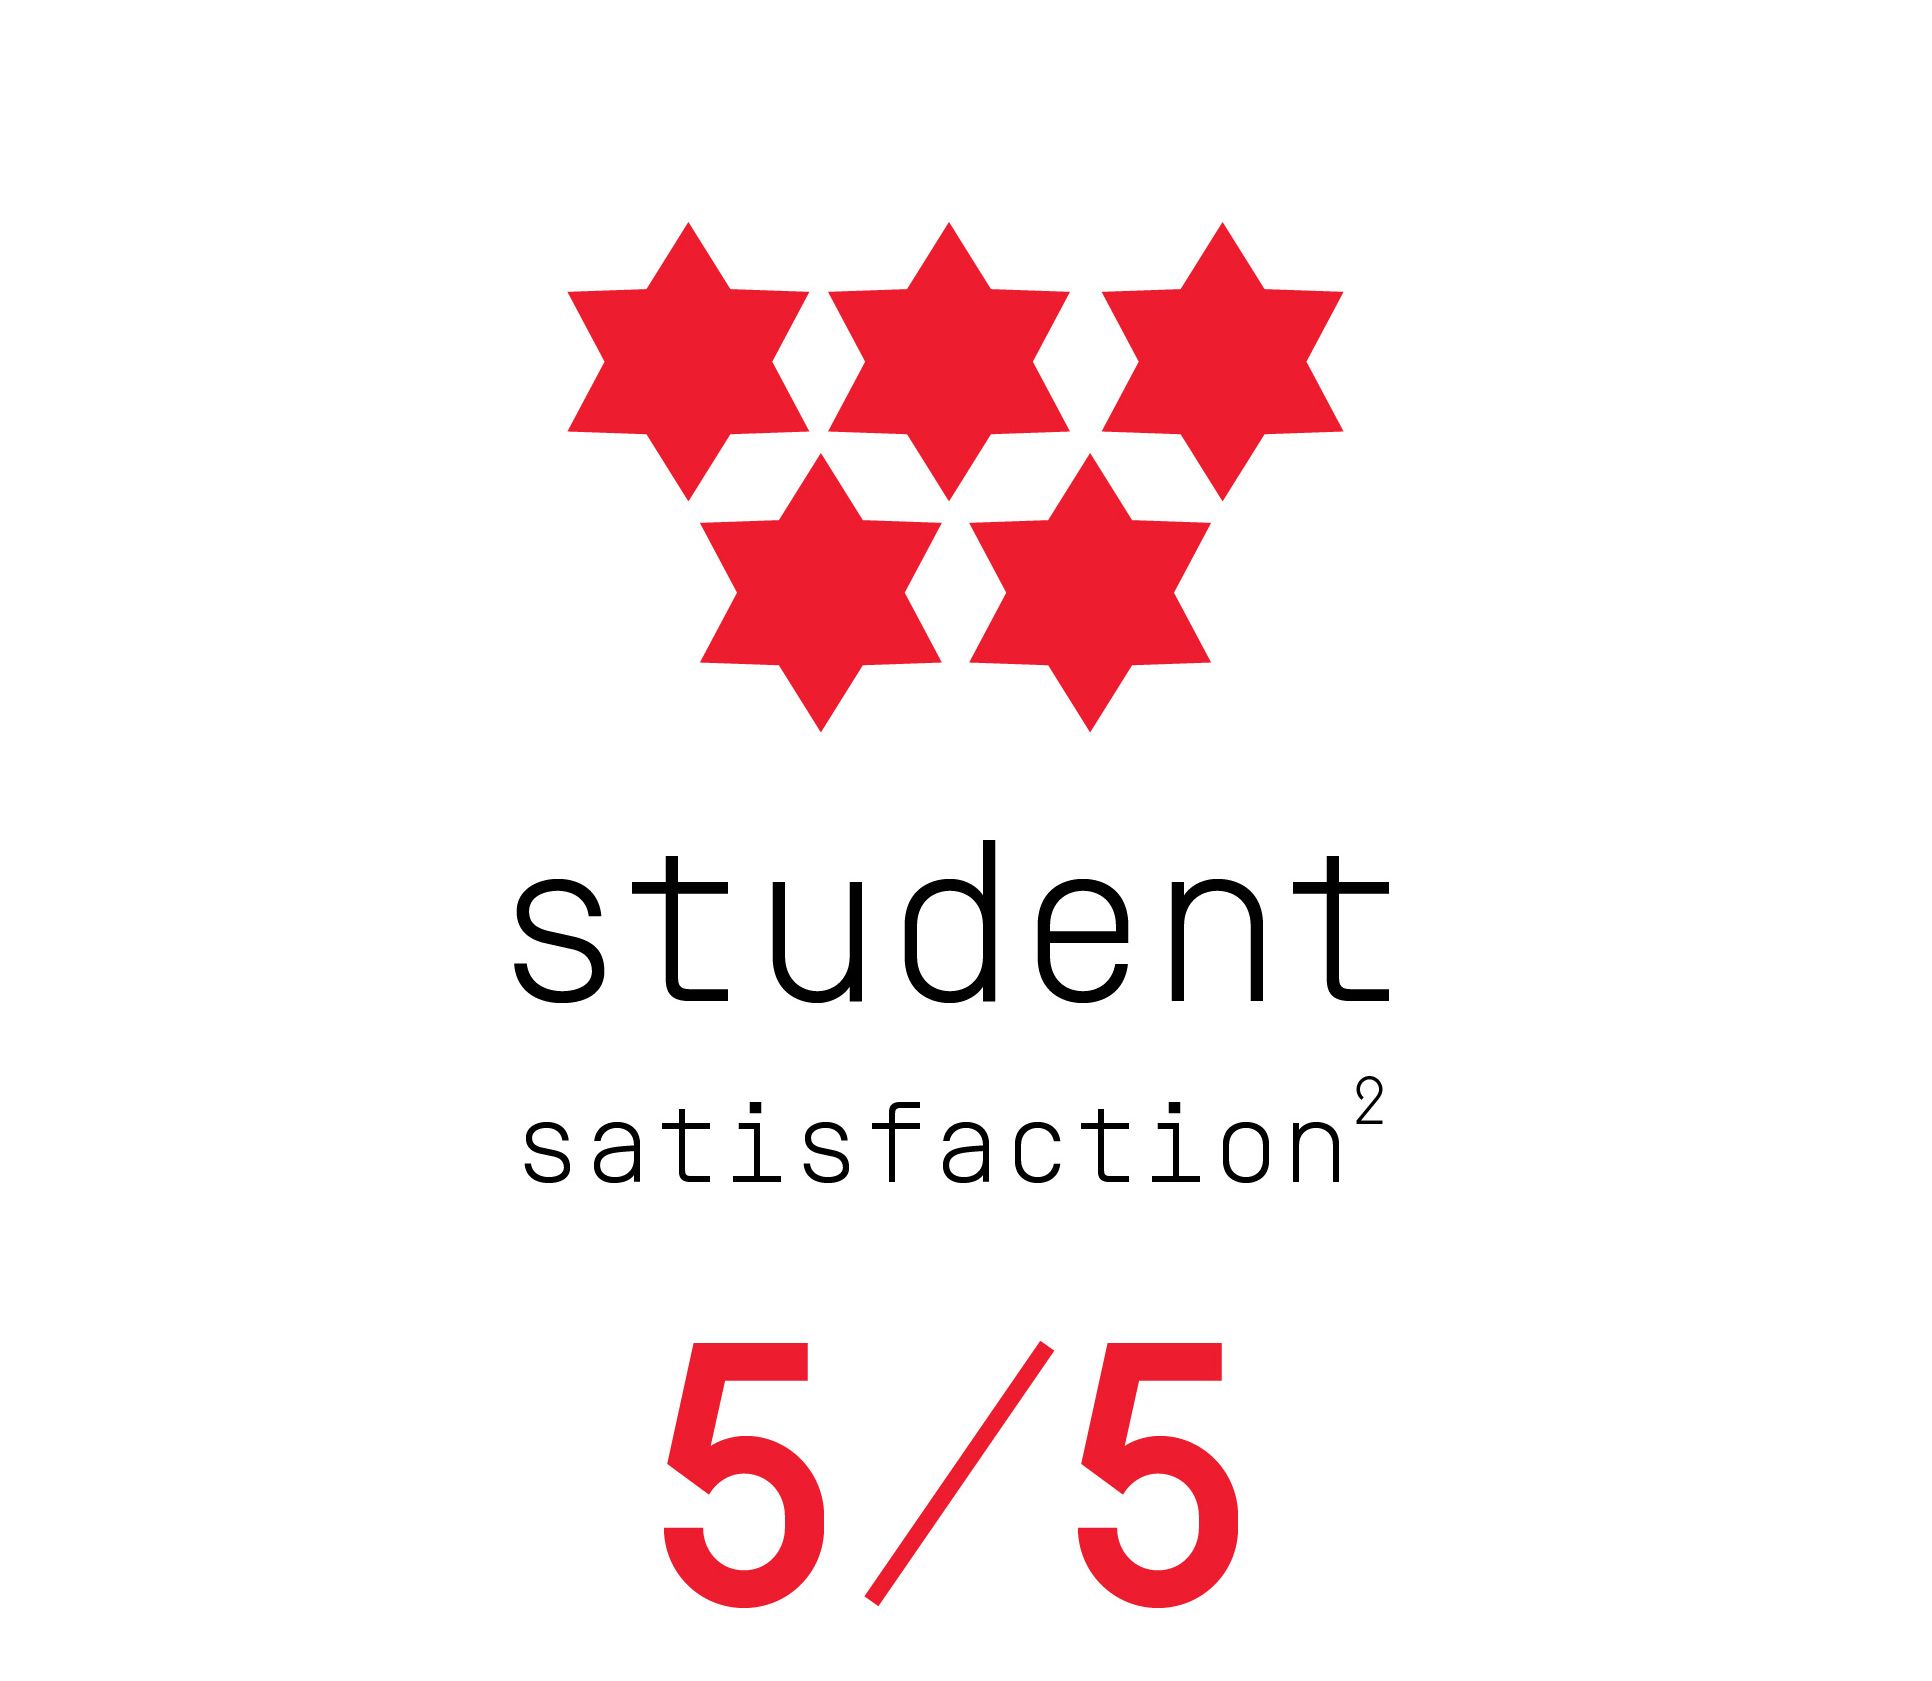 Student satisfaction 5/5 (footnote 2).